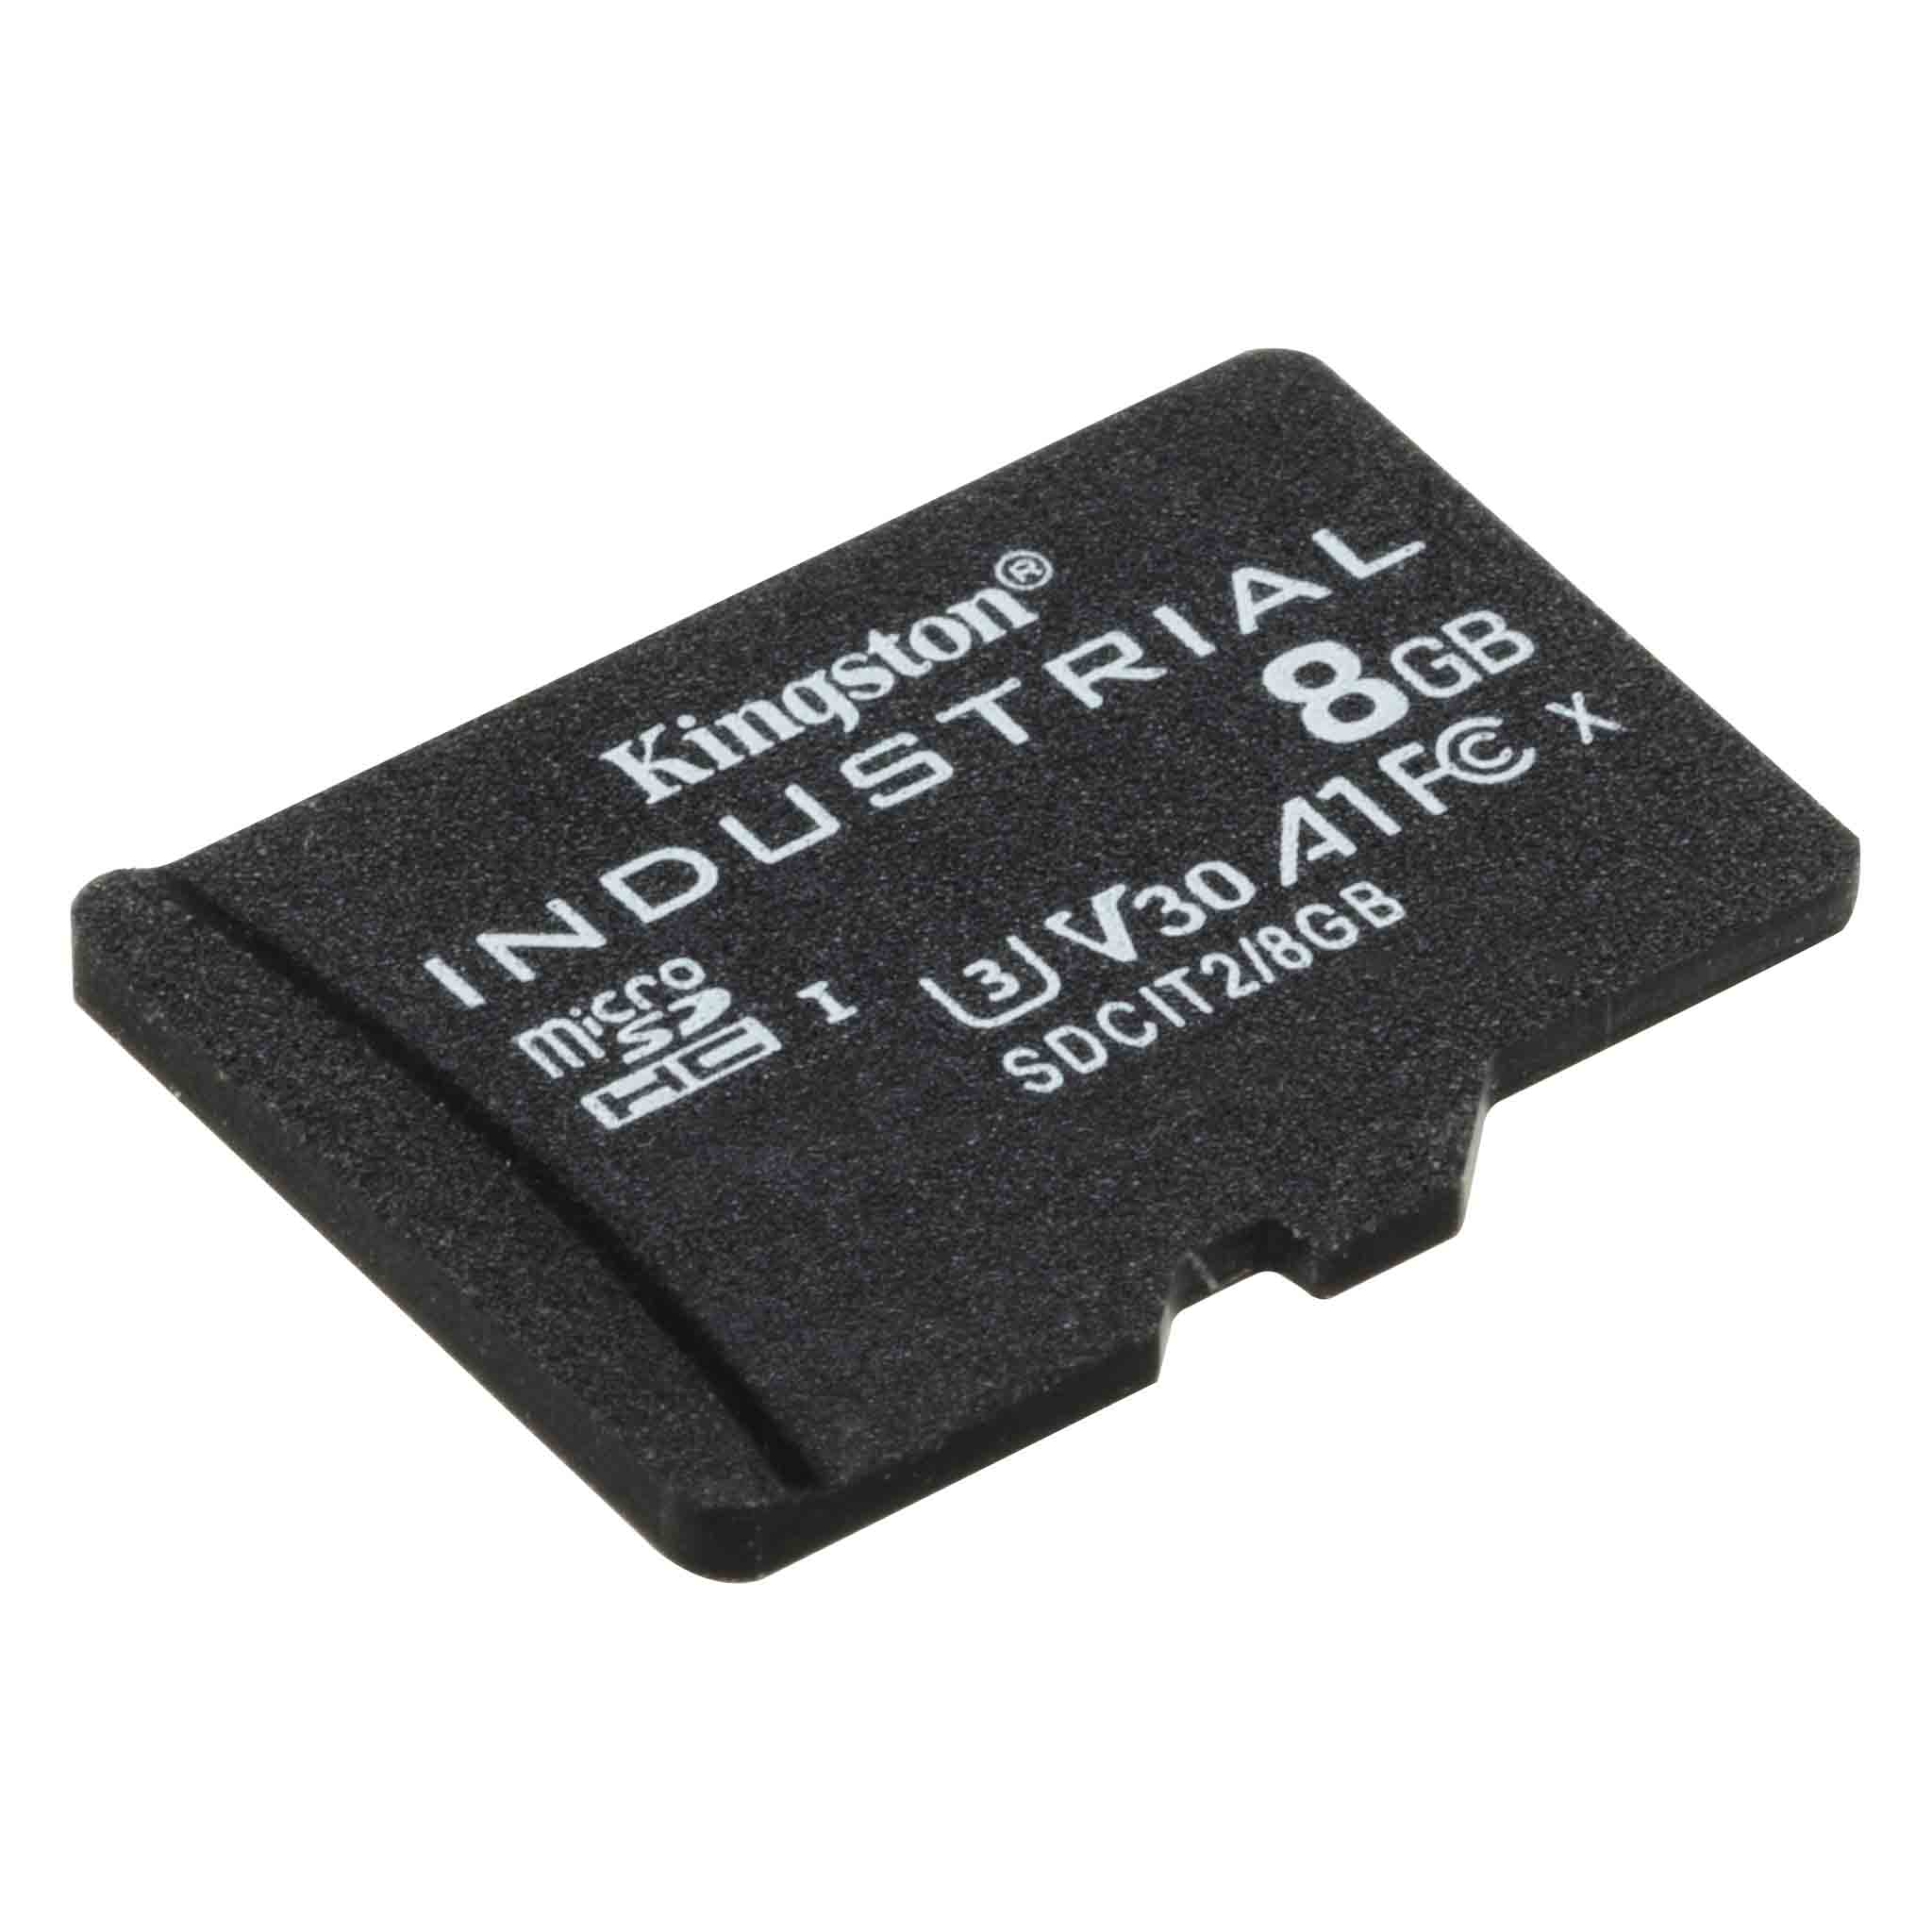 90MBs Works for Kingston Kingston Industrial Grade 8GB Vertu Constellation Smile MicroSDHC Card Verified by SanFlash. 